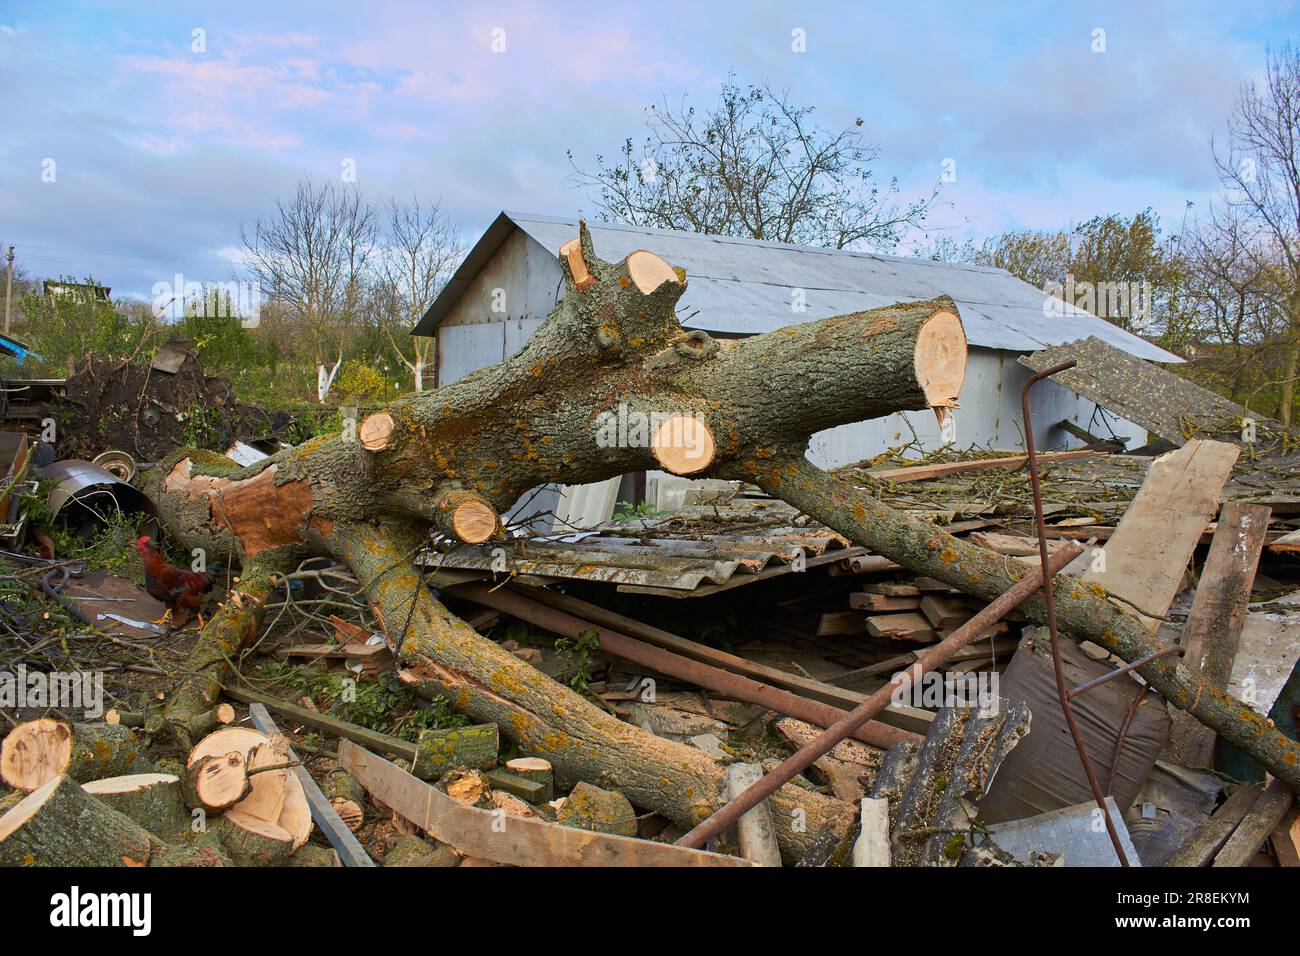 cut down a fallen tree after a storm Stock Photo